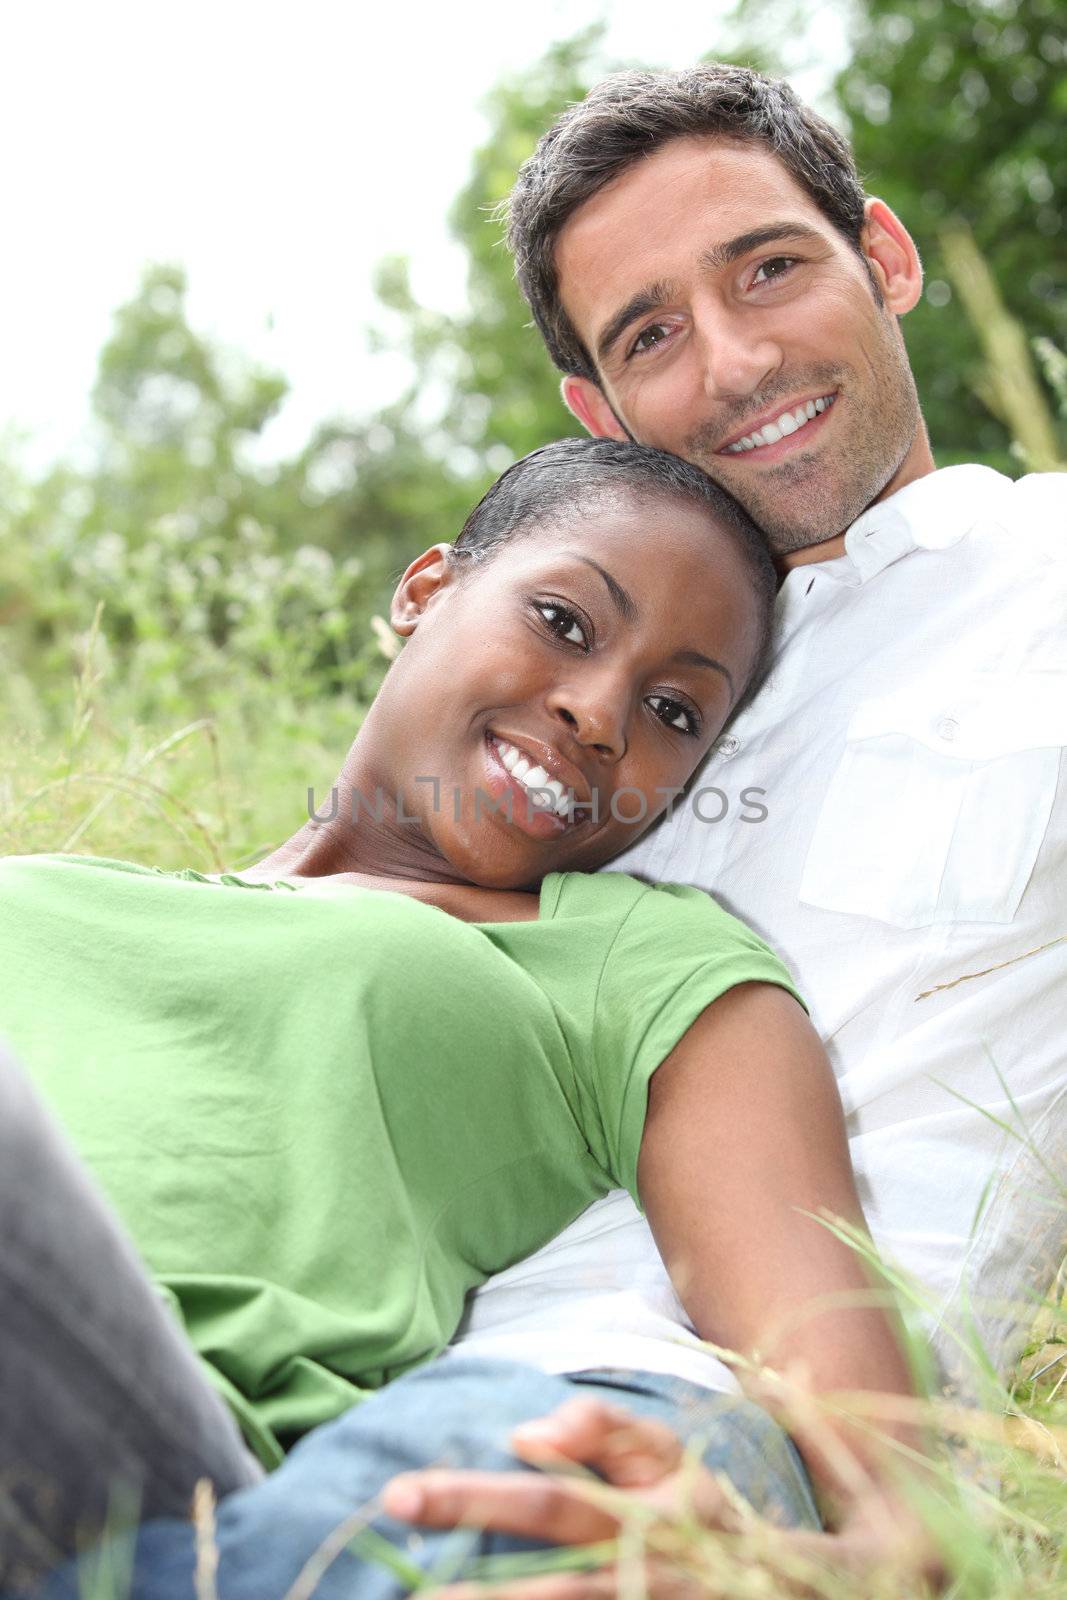 An interracial couple lying on grass.